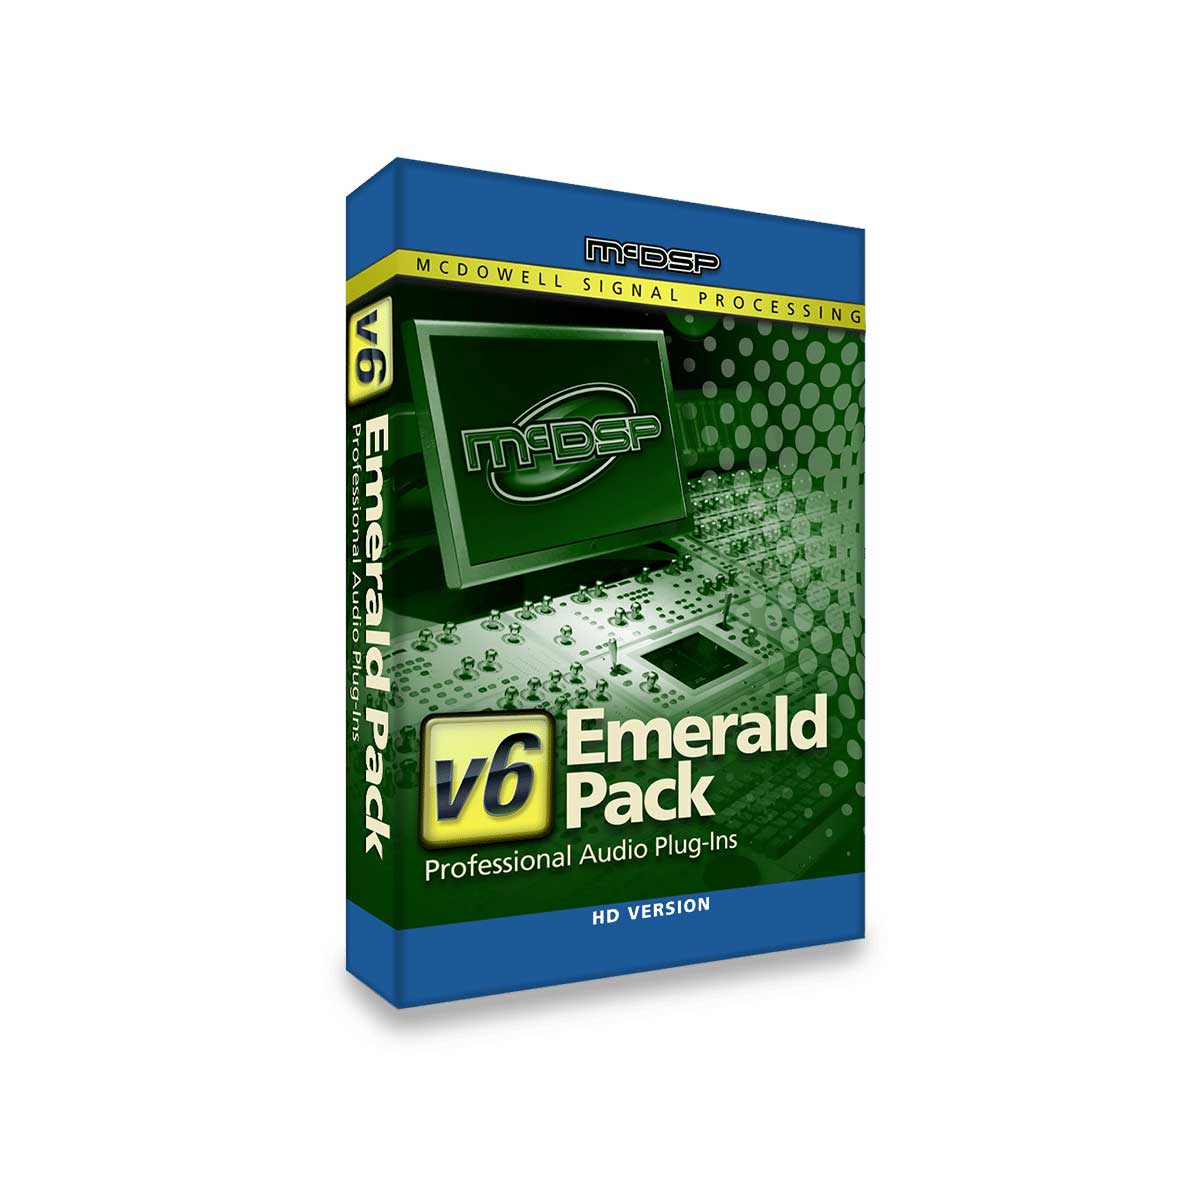 McDSP Emerald Pack HD v6 Complete Music Production Bundle (Serial Nr + Digital Download)